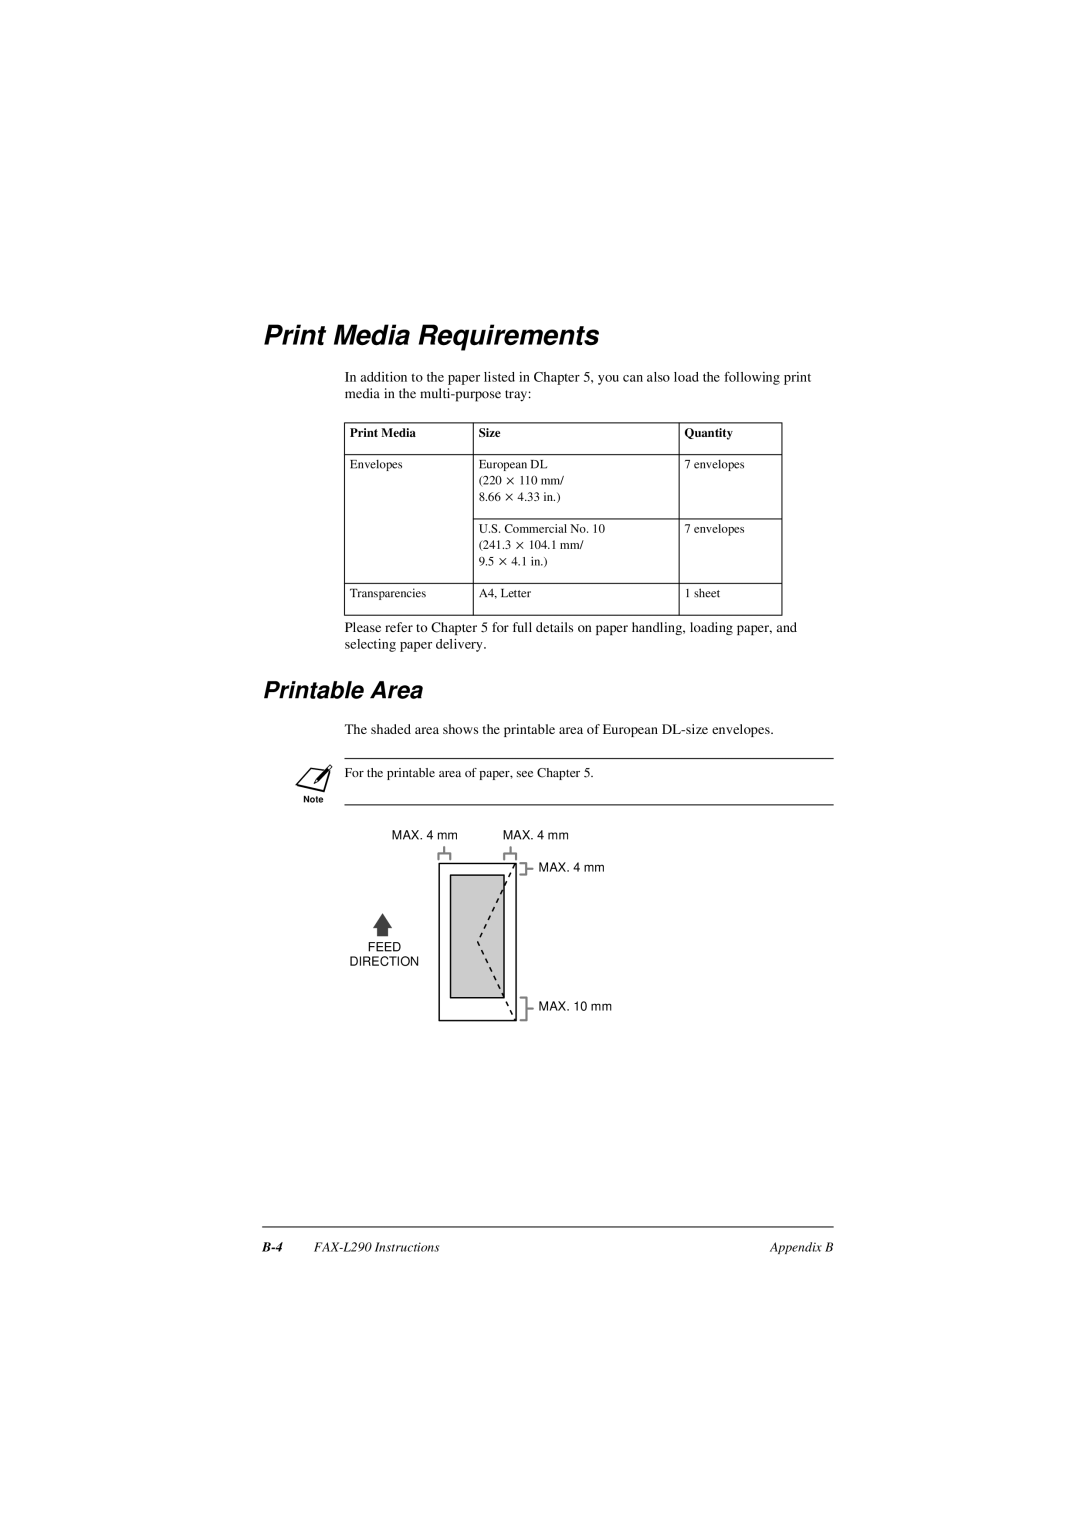 Canon L290, L240 manual Print Media Requirements, Printable Area 